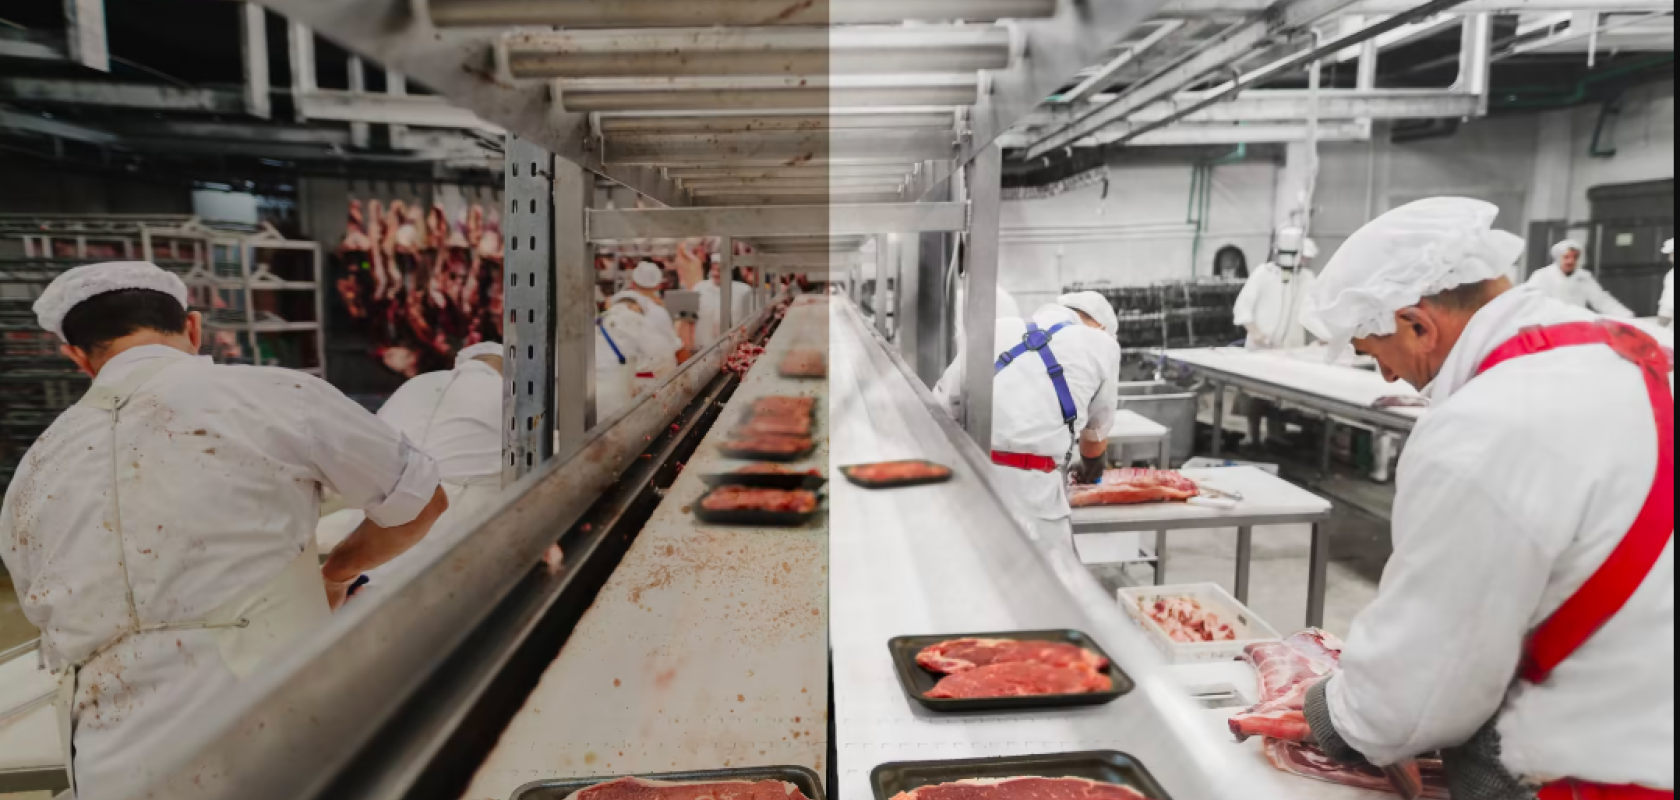 Workers on meat packing conveyor belt